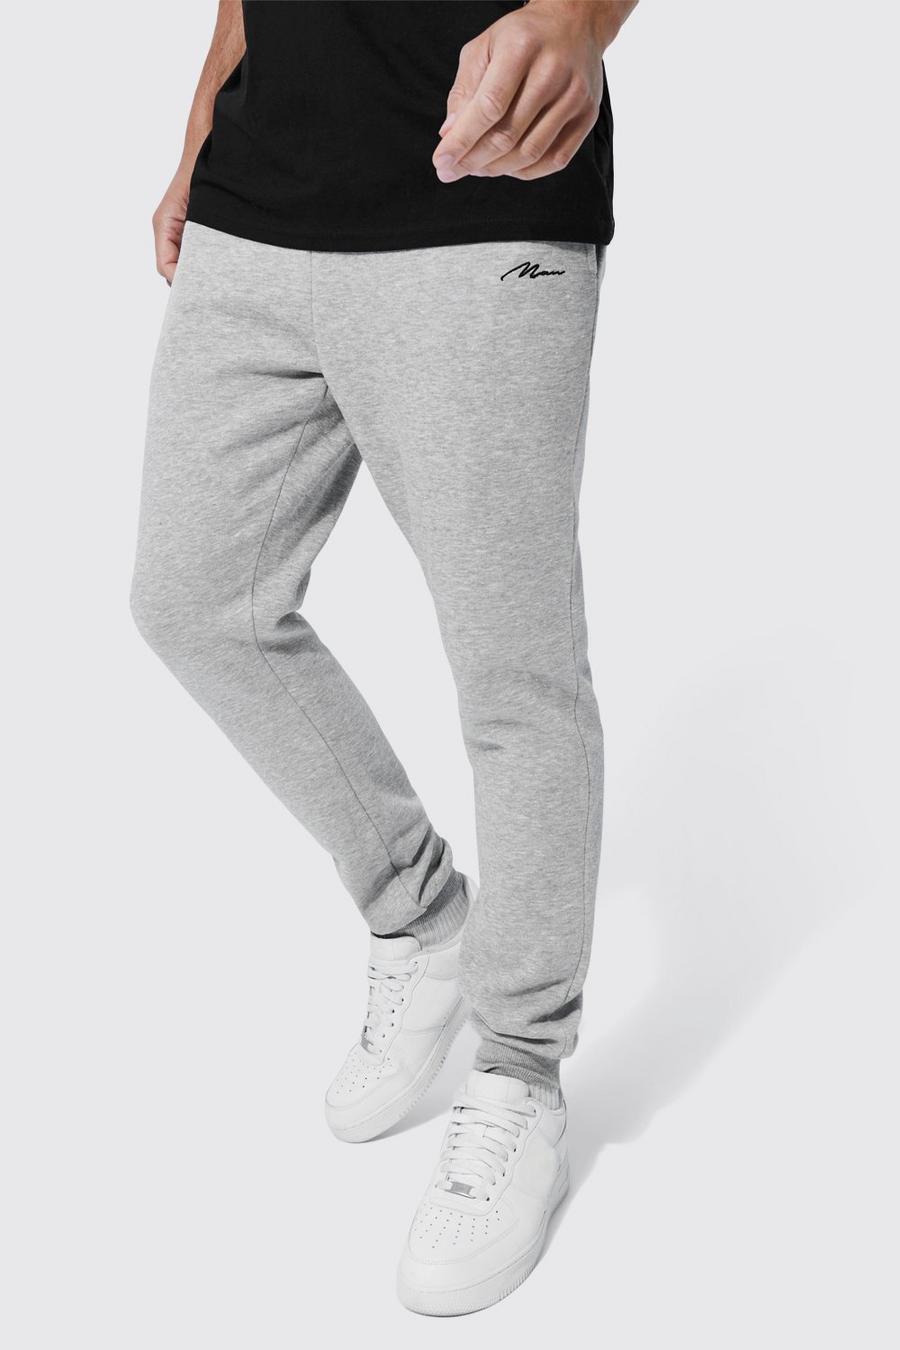 Pantaloni tuta Tall Basic Skinny Fit con firma Man, Grey marl grigio